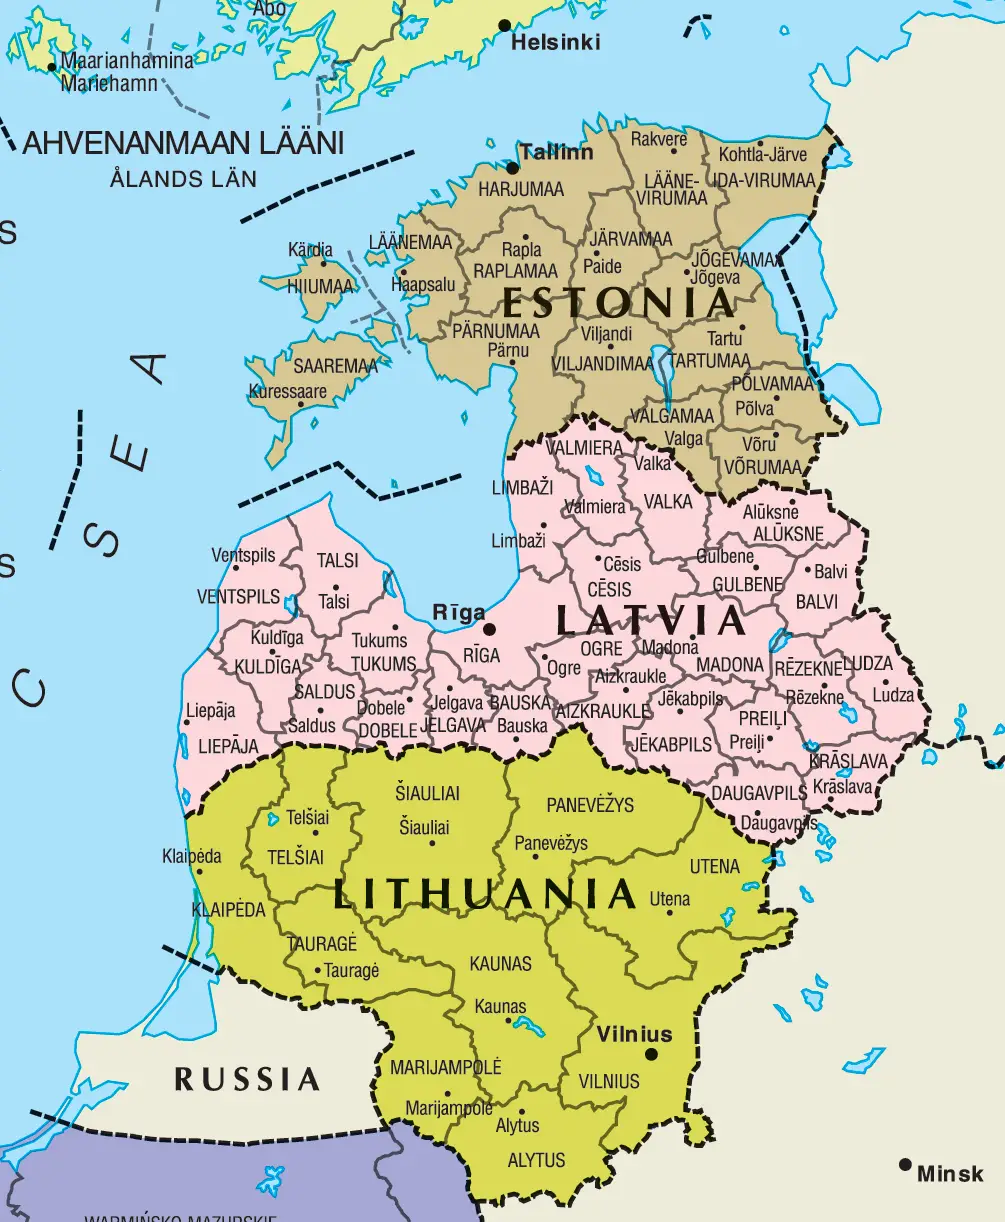 baltik_ulkeleri_harita.png